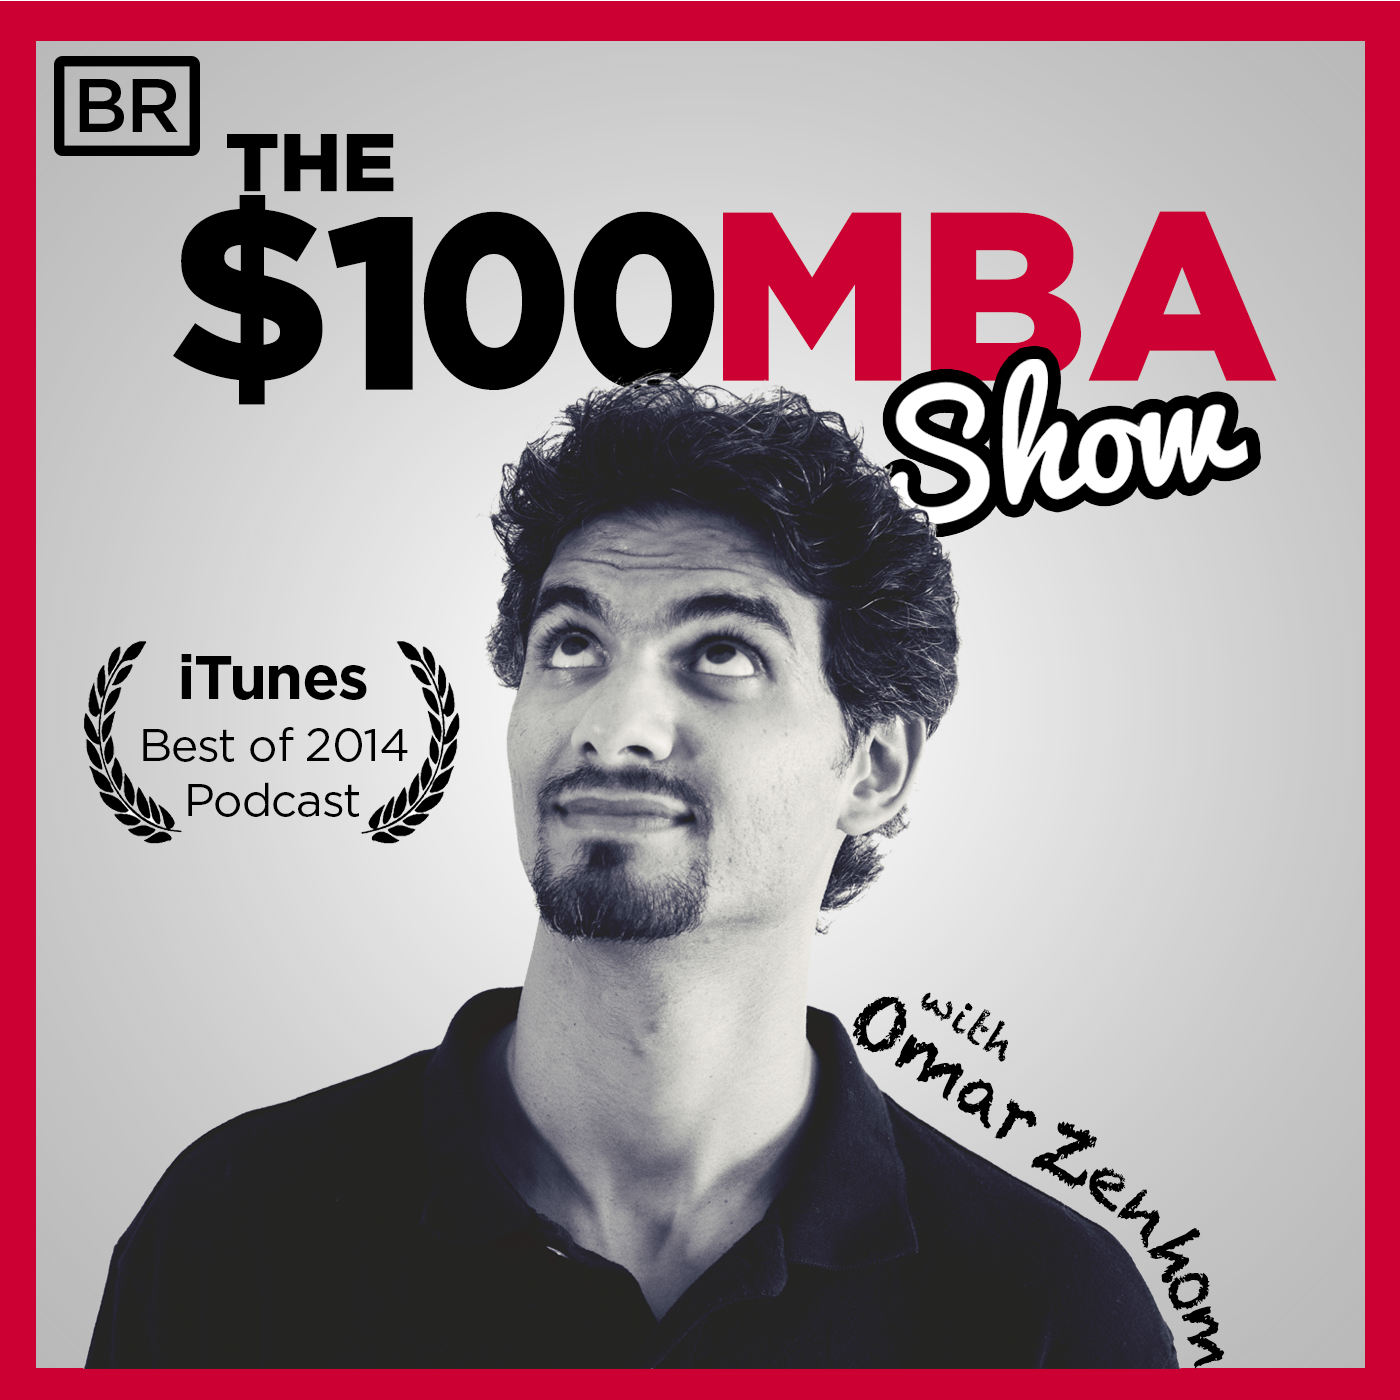 $100 mba podcast